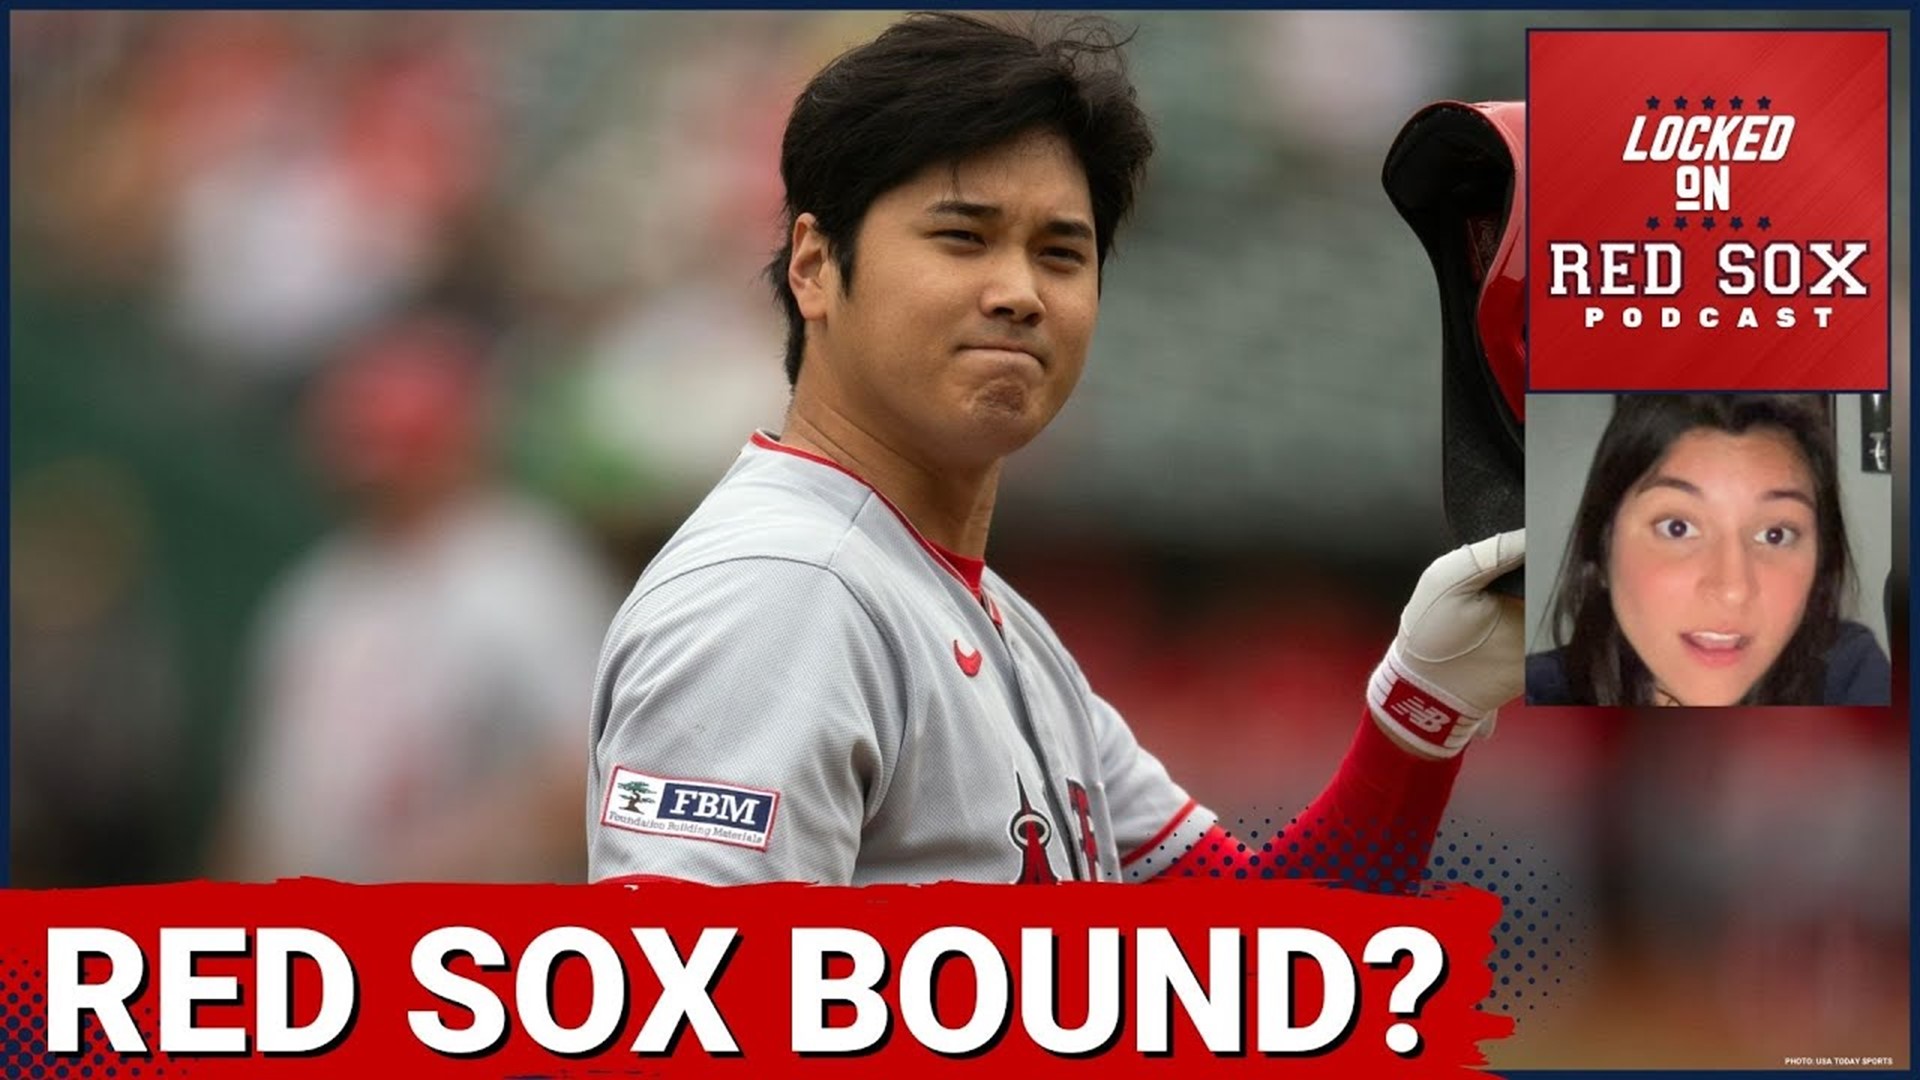 Will Shohei Ohtani really come to Boston?